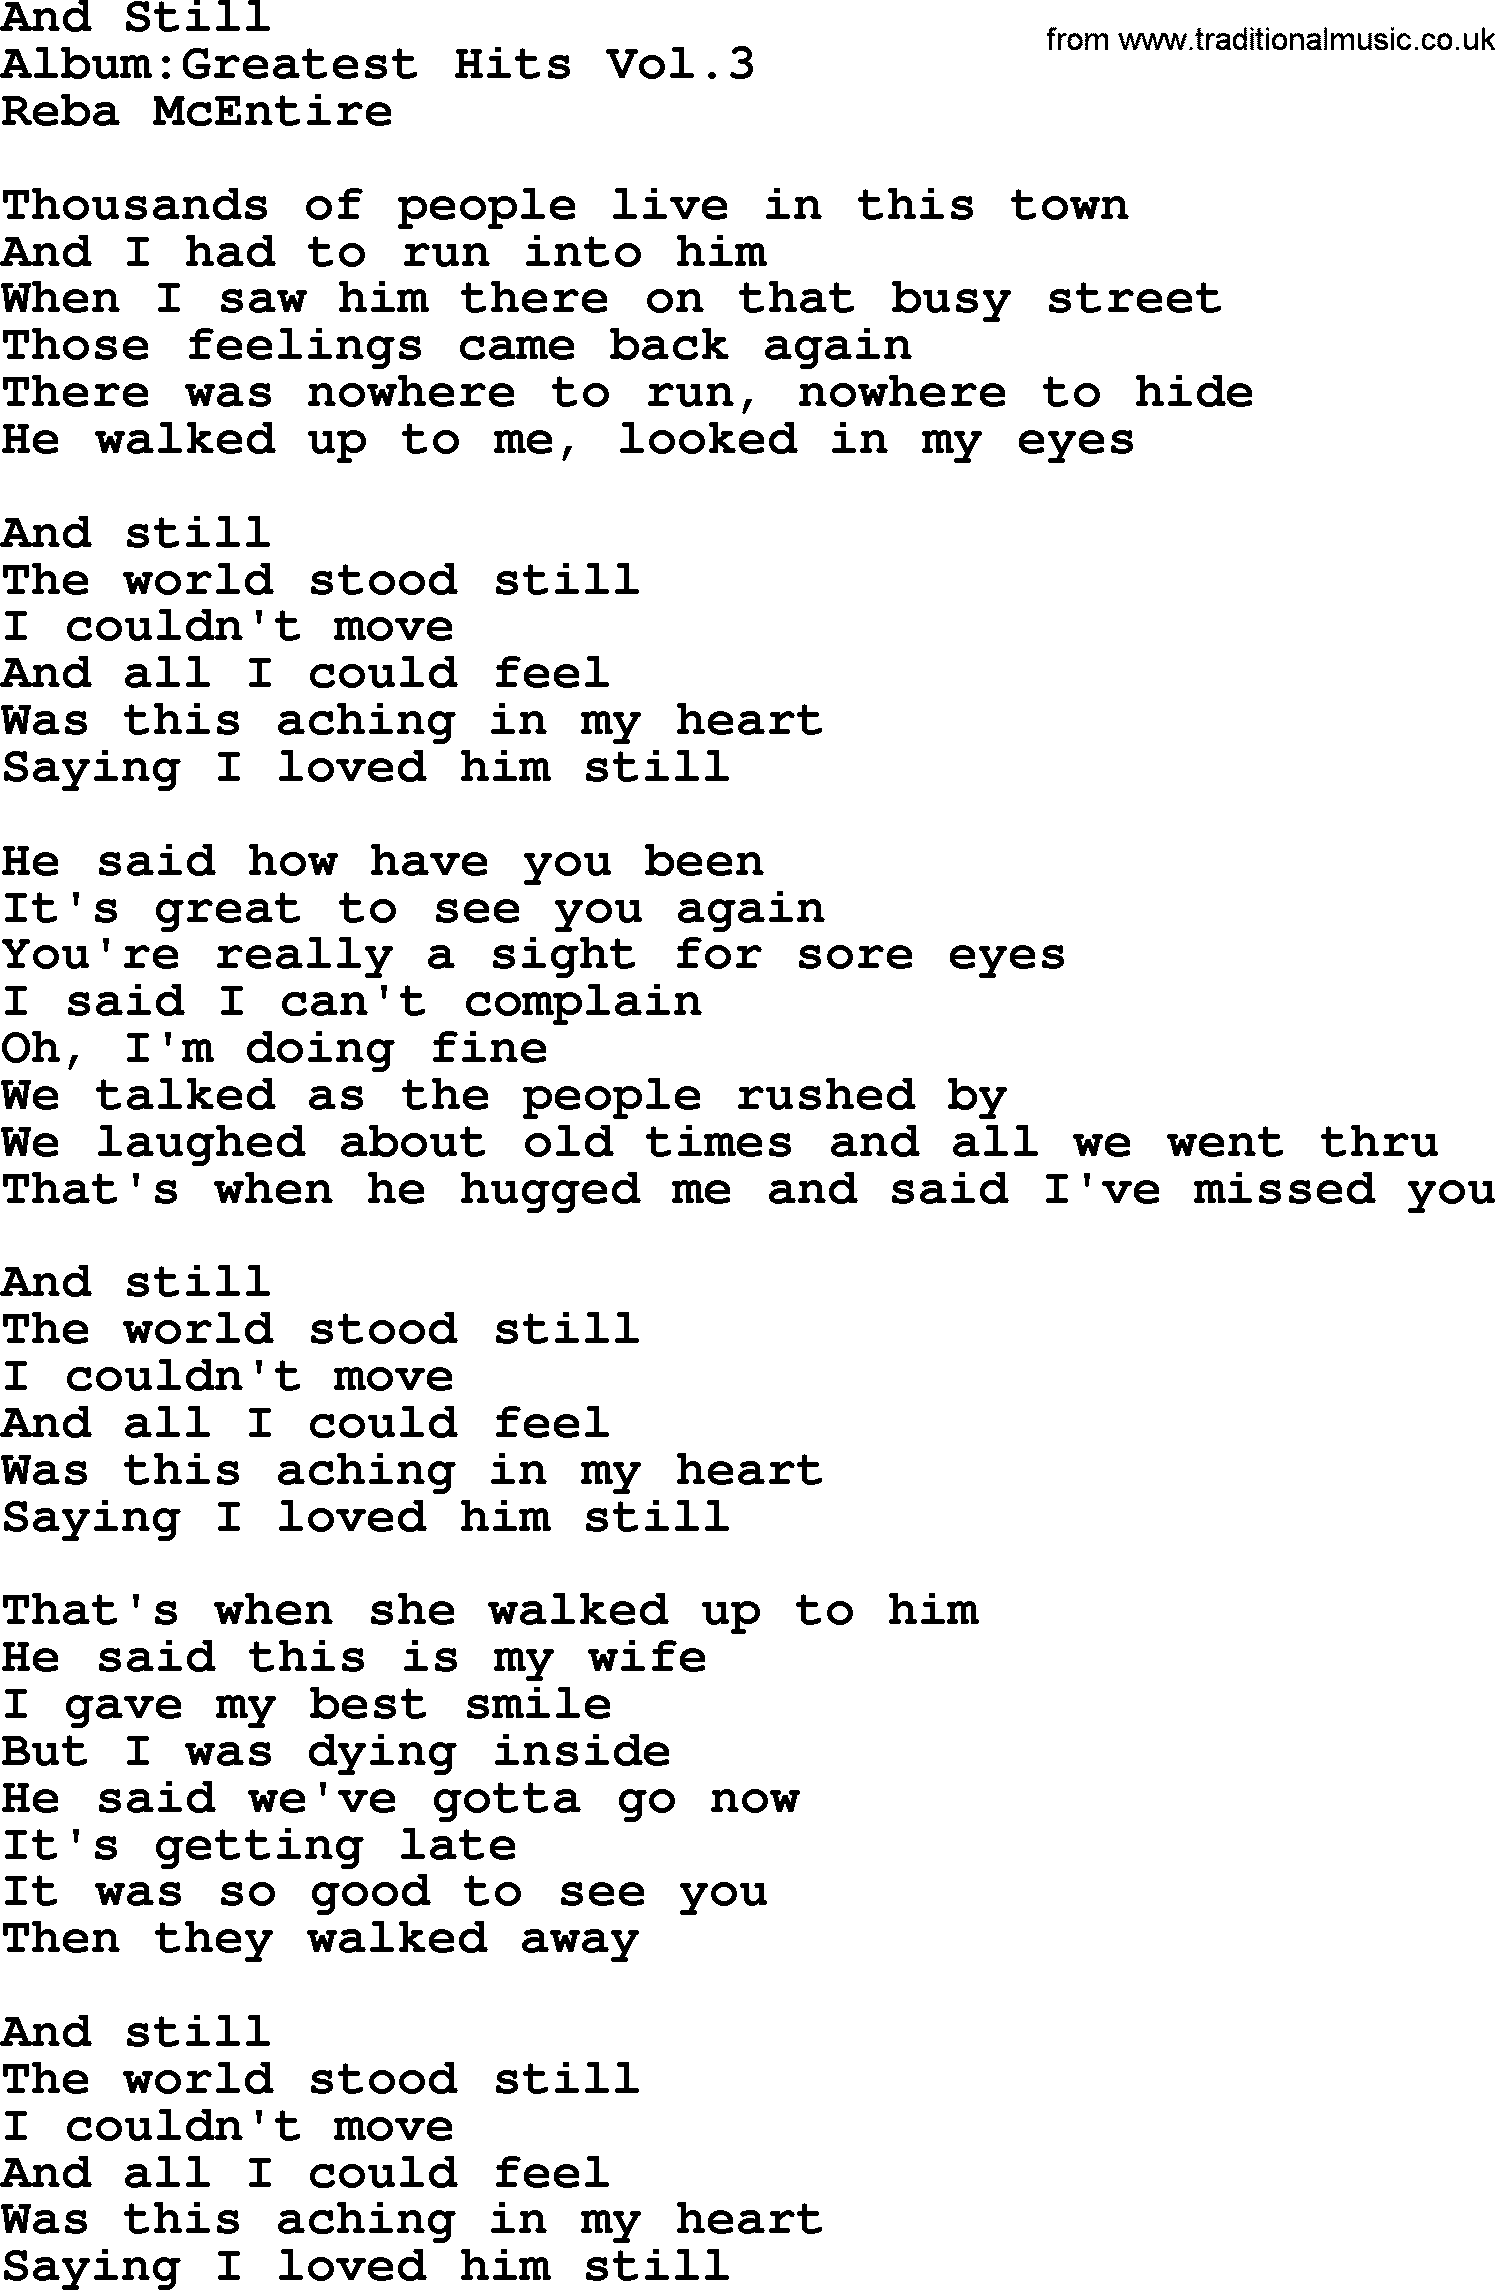 And Still, by Reba McEntire - lyrics